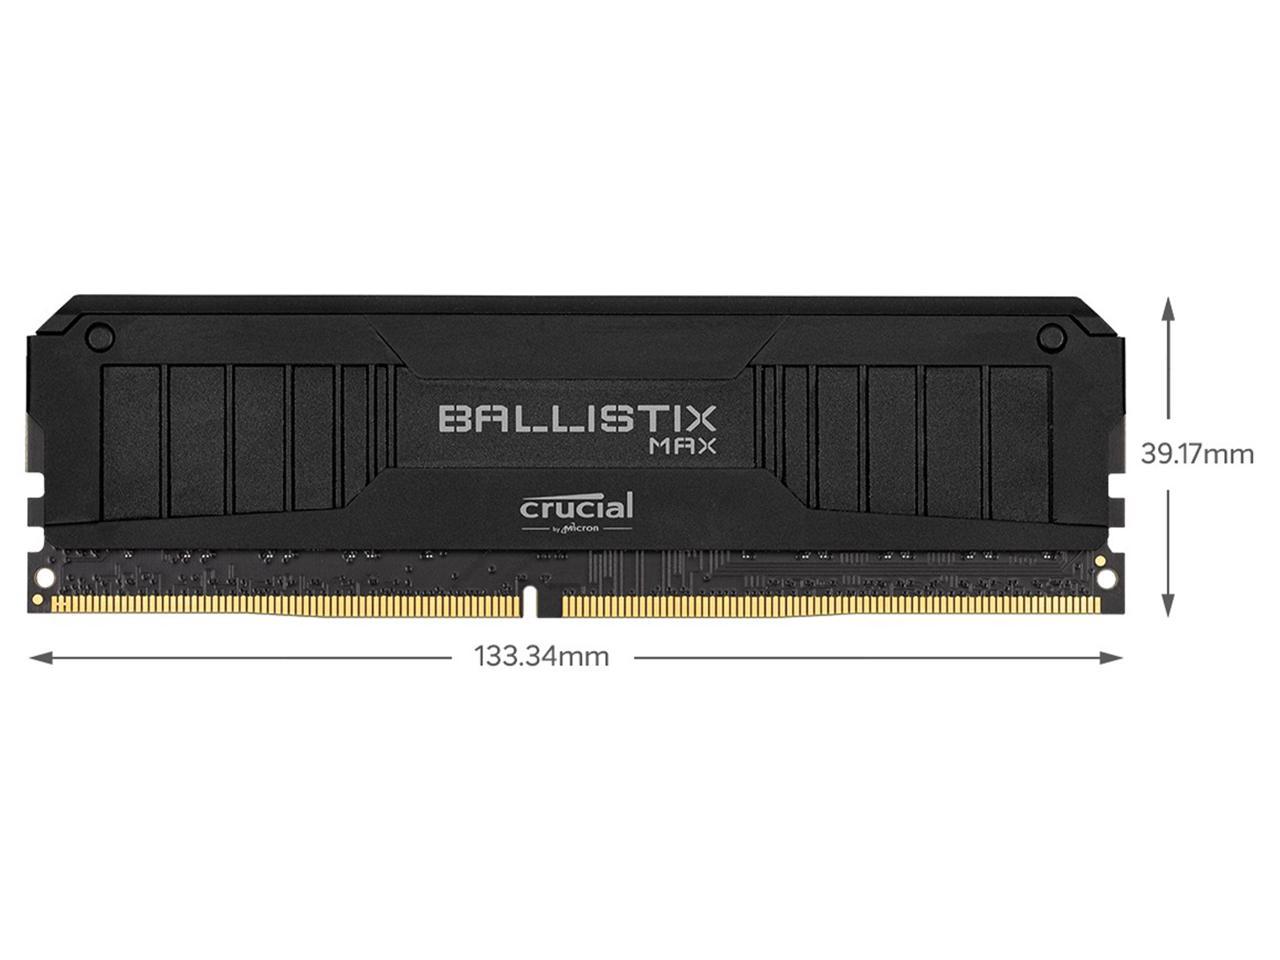 Crucial Ballistix MAX RGB 4400 MHz DDR4 DRAM Desktop Gaming Memory Kit